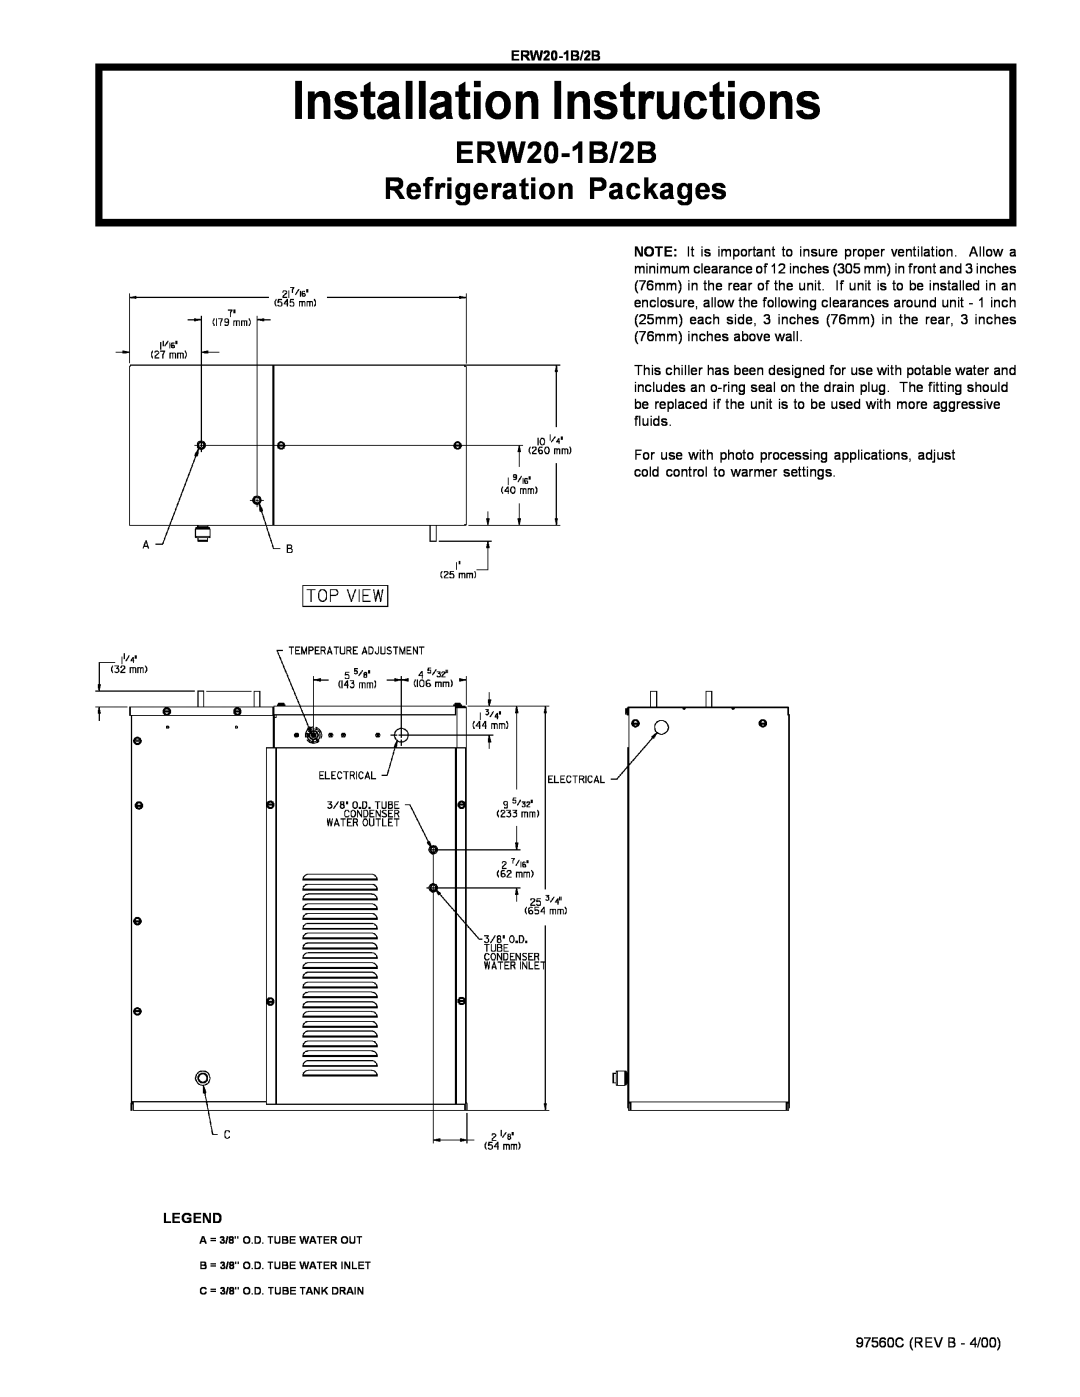 Elkay ERW20-2B installation instructions Installation Instructions, ERW20-1B/2B Refrigeration Packages 